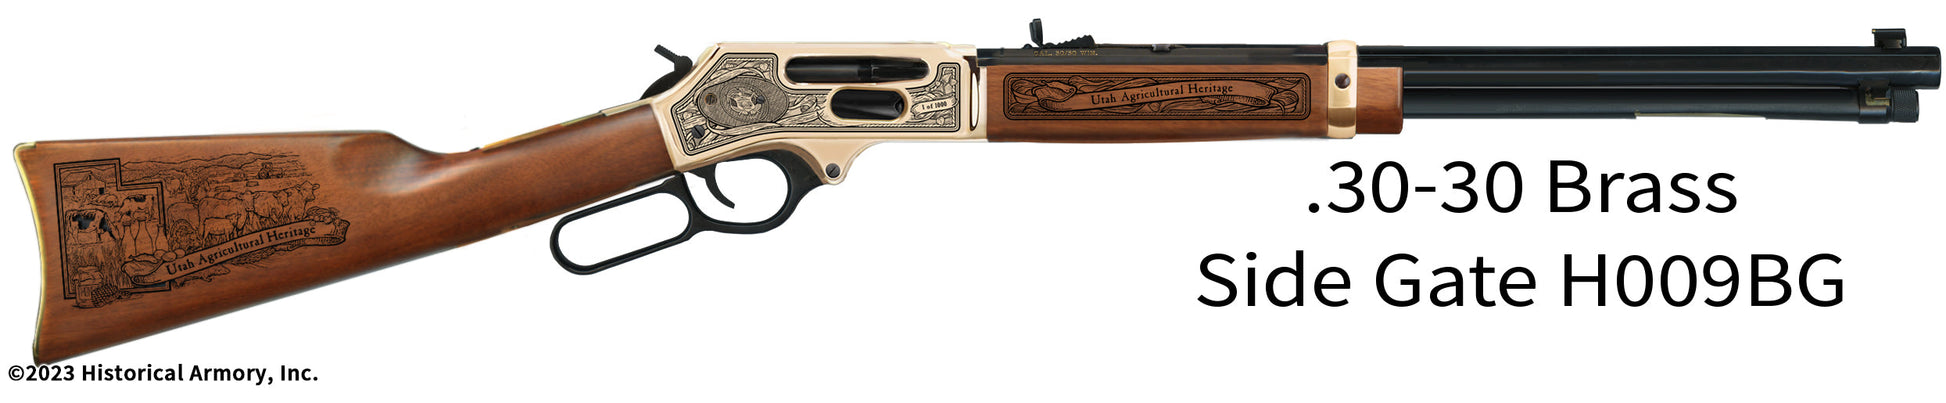 Utah Agricultural Heritage Engraved Henry .30-30 Brass Side Gate H009BG Rifle